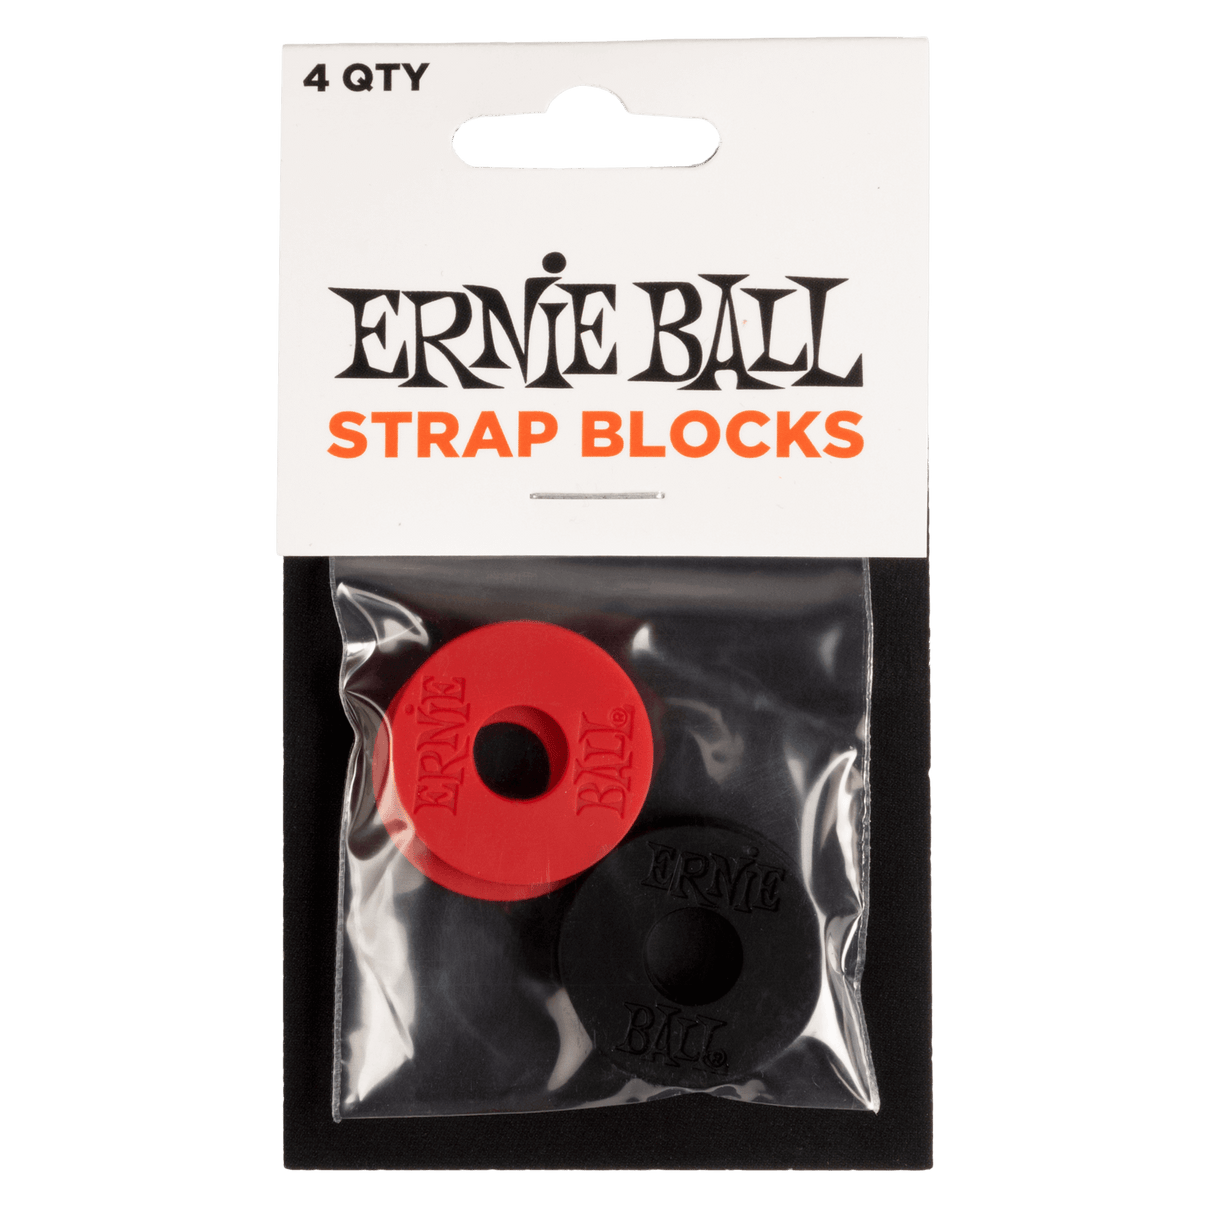 ERNIE BALL Strap Blocks 4-Pack